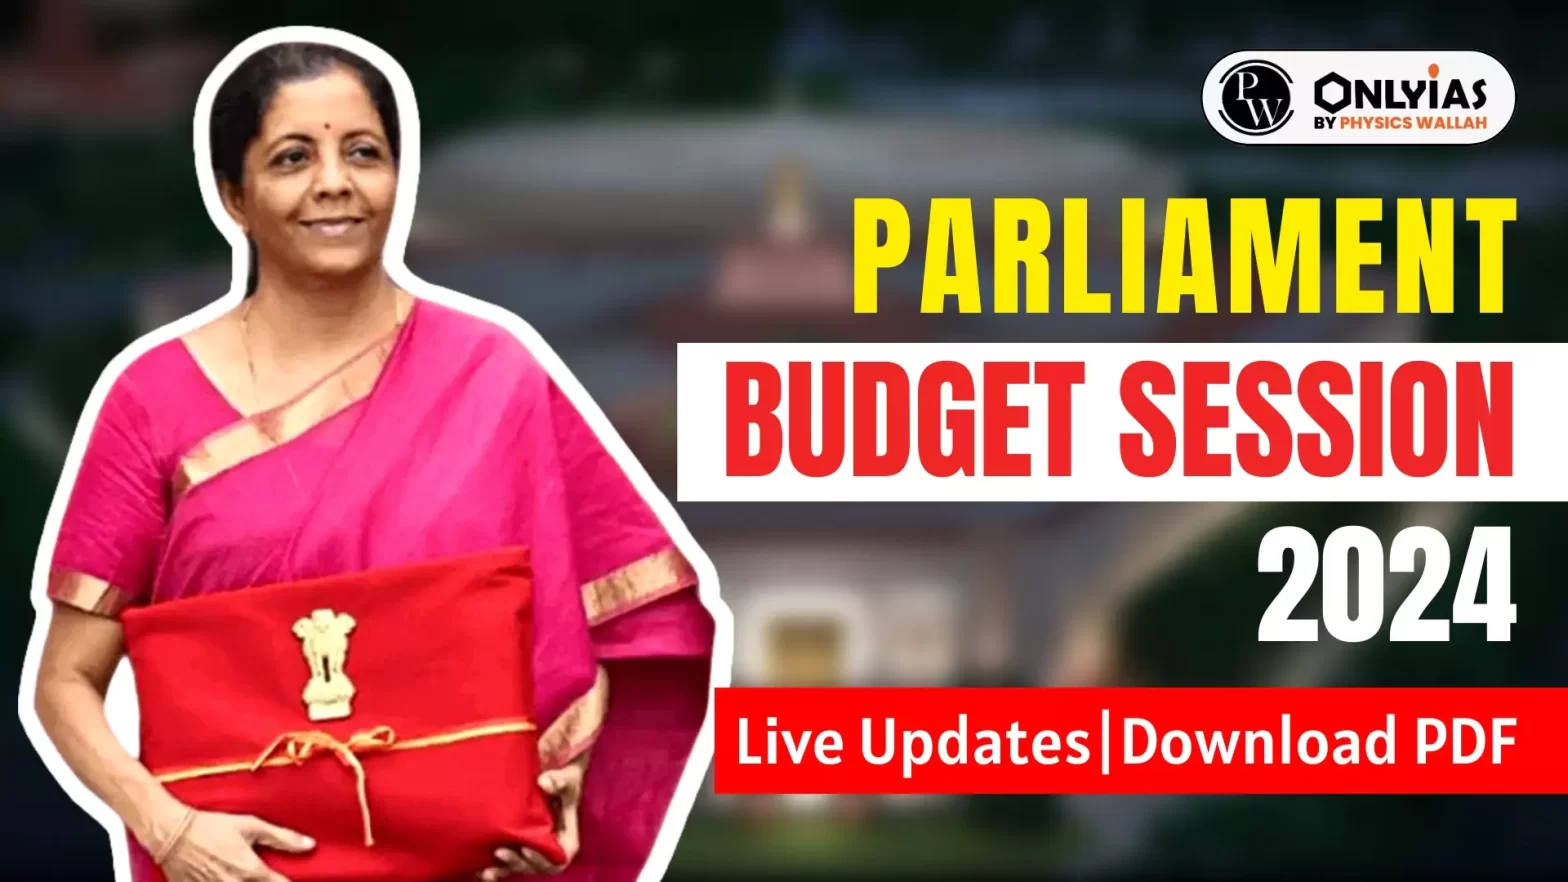 Parliament Budget Session 2024 Live Updates Download PDF PWOnlyIAS